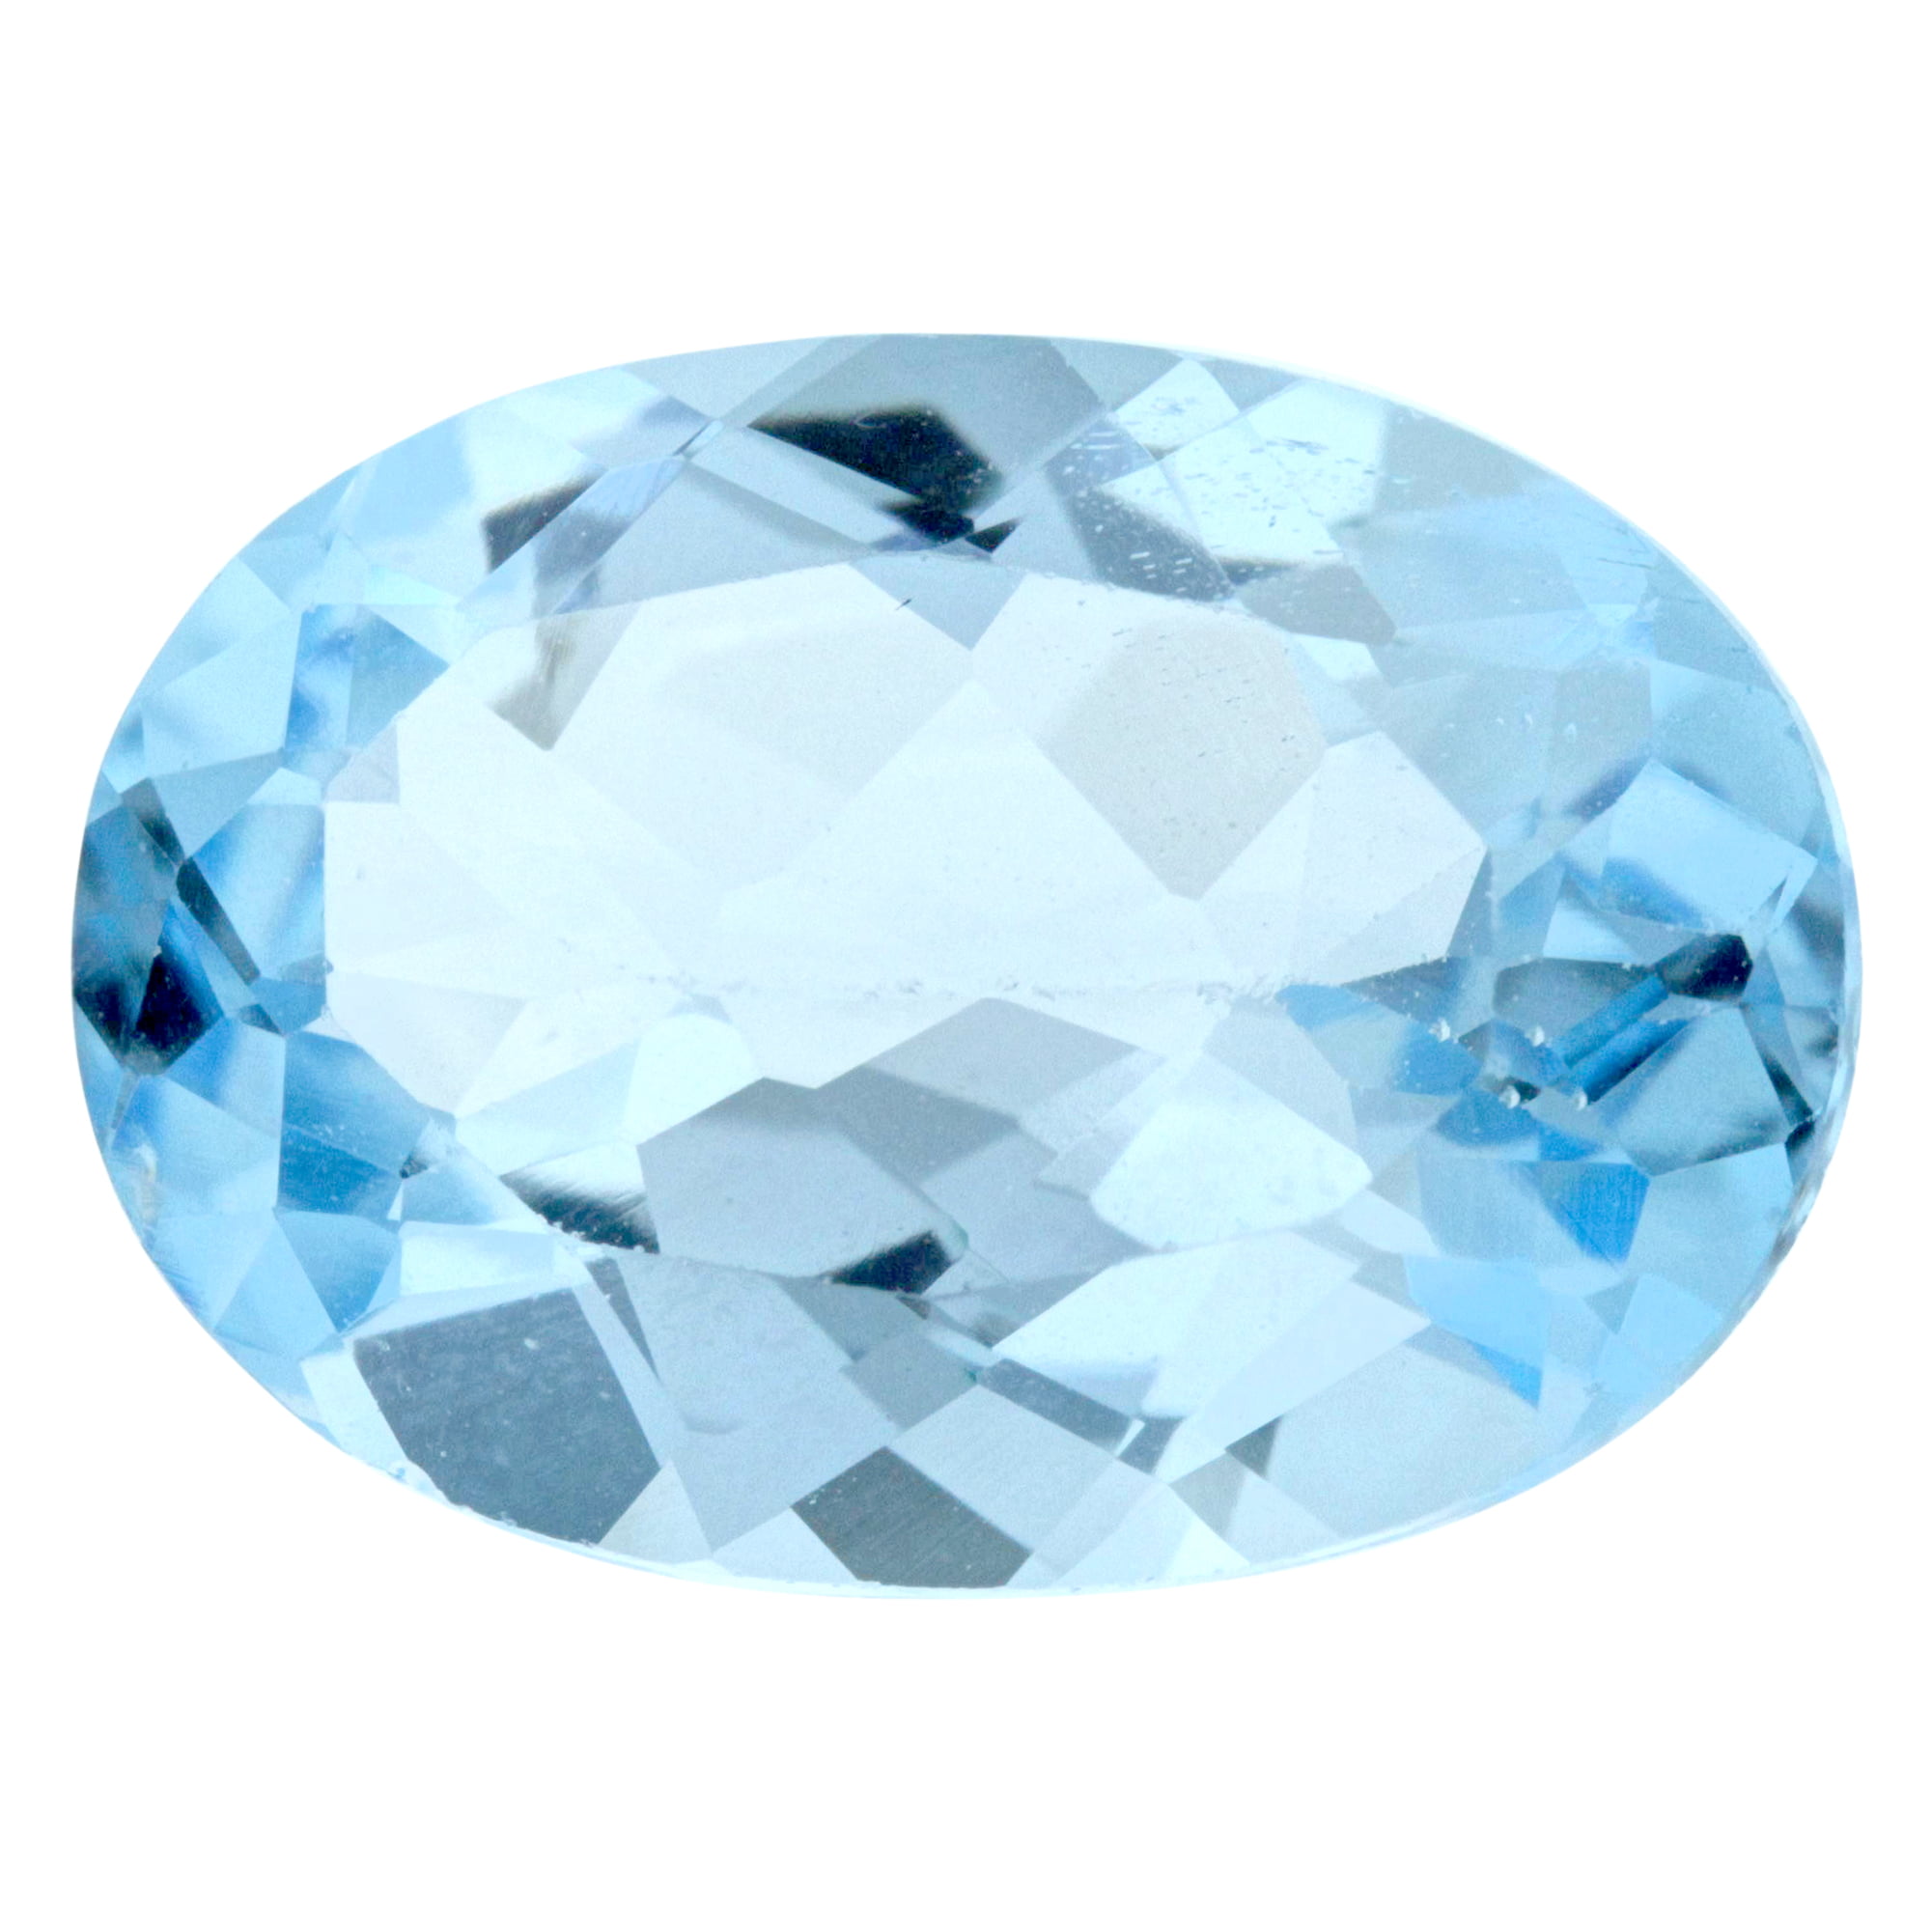 Blue Topaz Faceted Gemstone Sky Blue Topaz Round Faceted Loose Gemstone 10 piece 6mm Sky Blue Topaz Faceted Round Gemstone